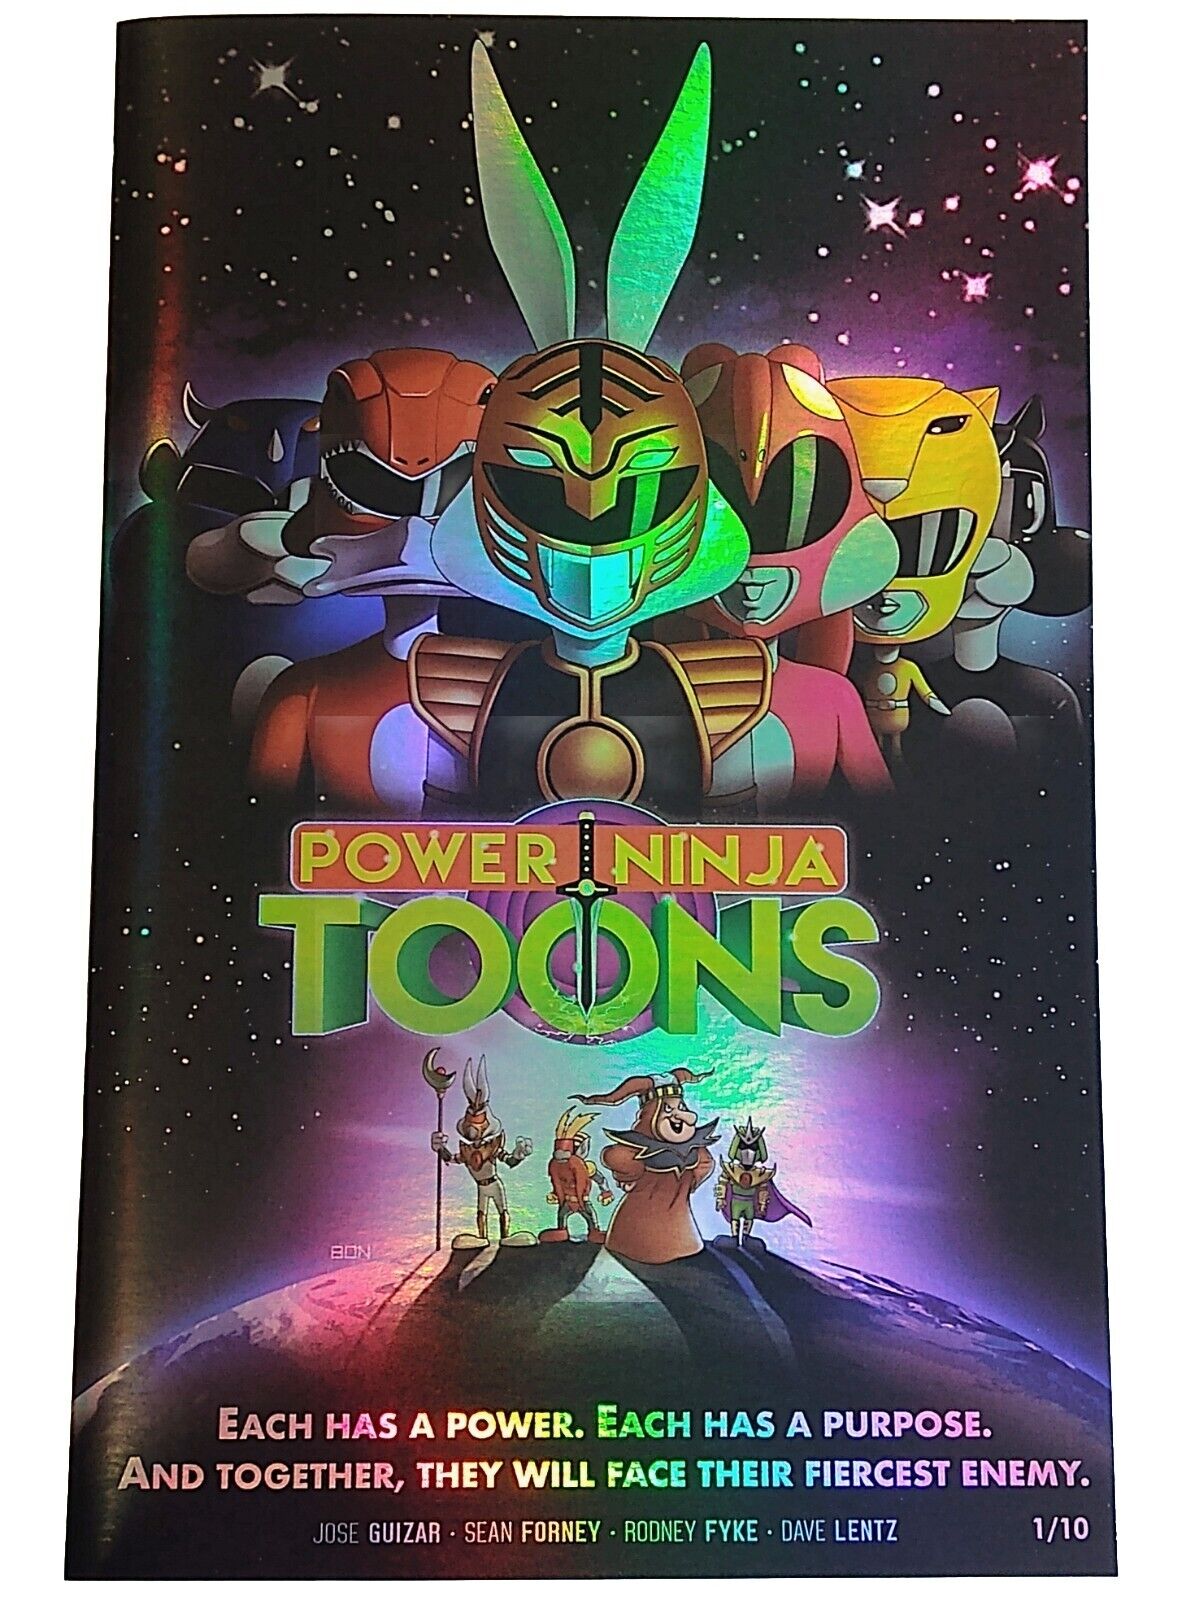 Power Ninja Toons Power Rangers Movie Poster Foil Cover Homage #1/10 MMPR